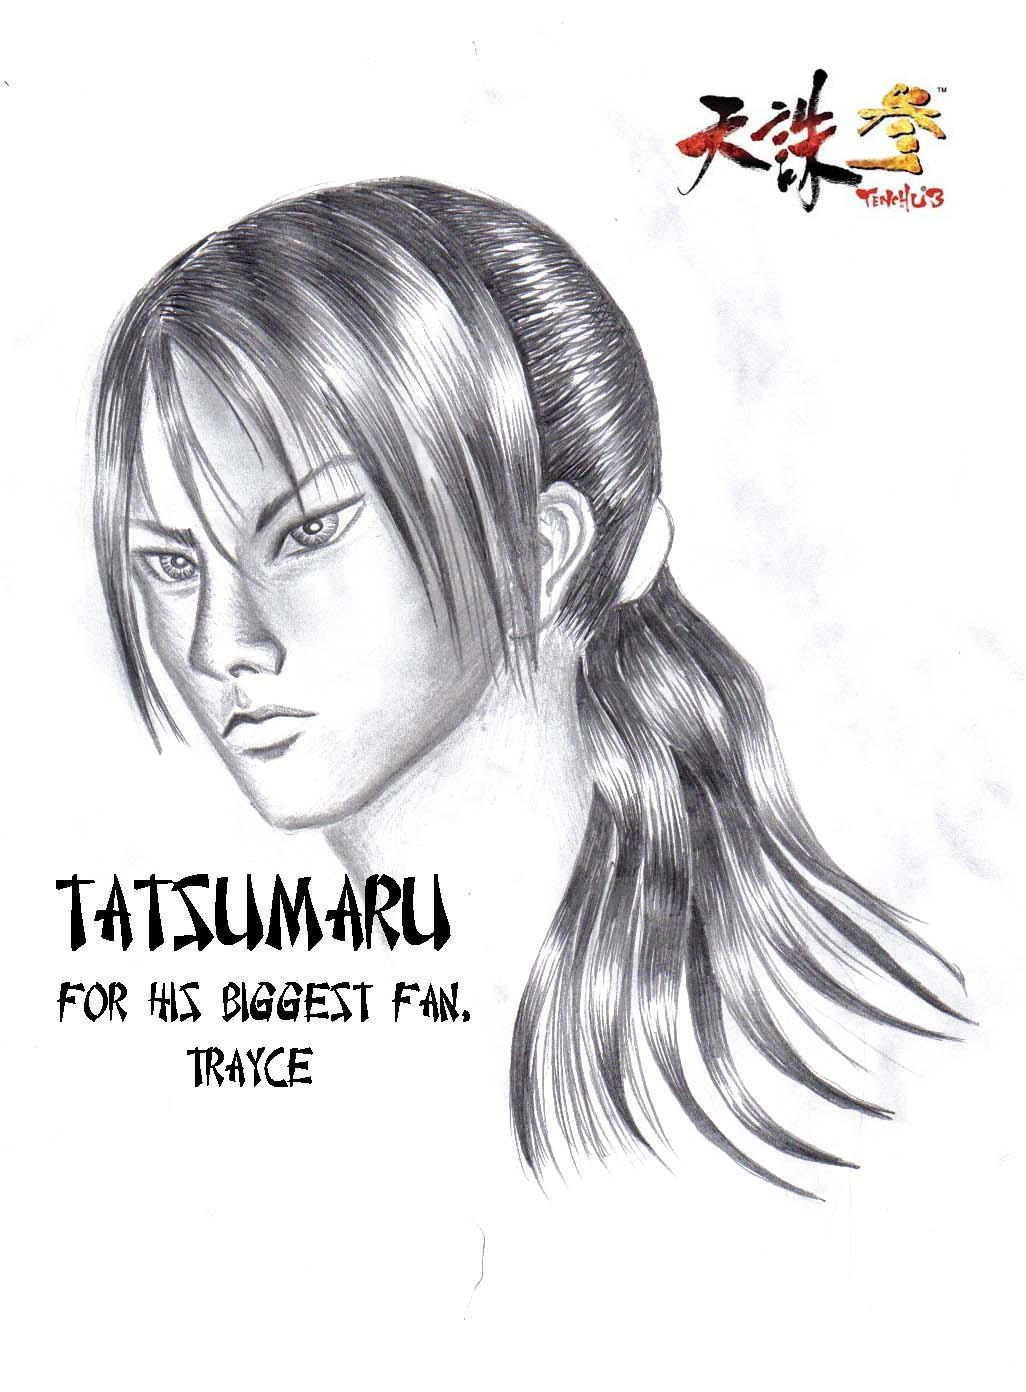 Tatsumaru From Tenchu by CrimsonButterflty on DeviantArt